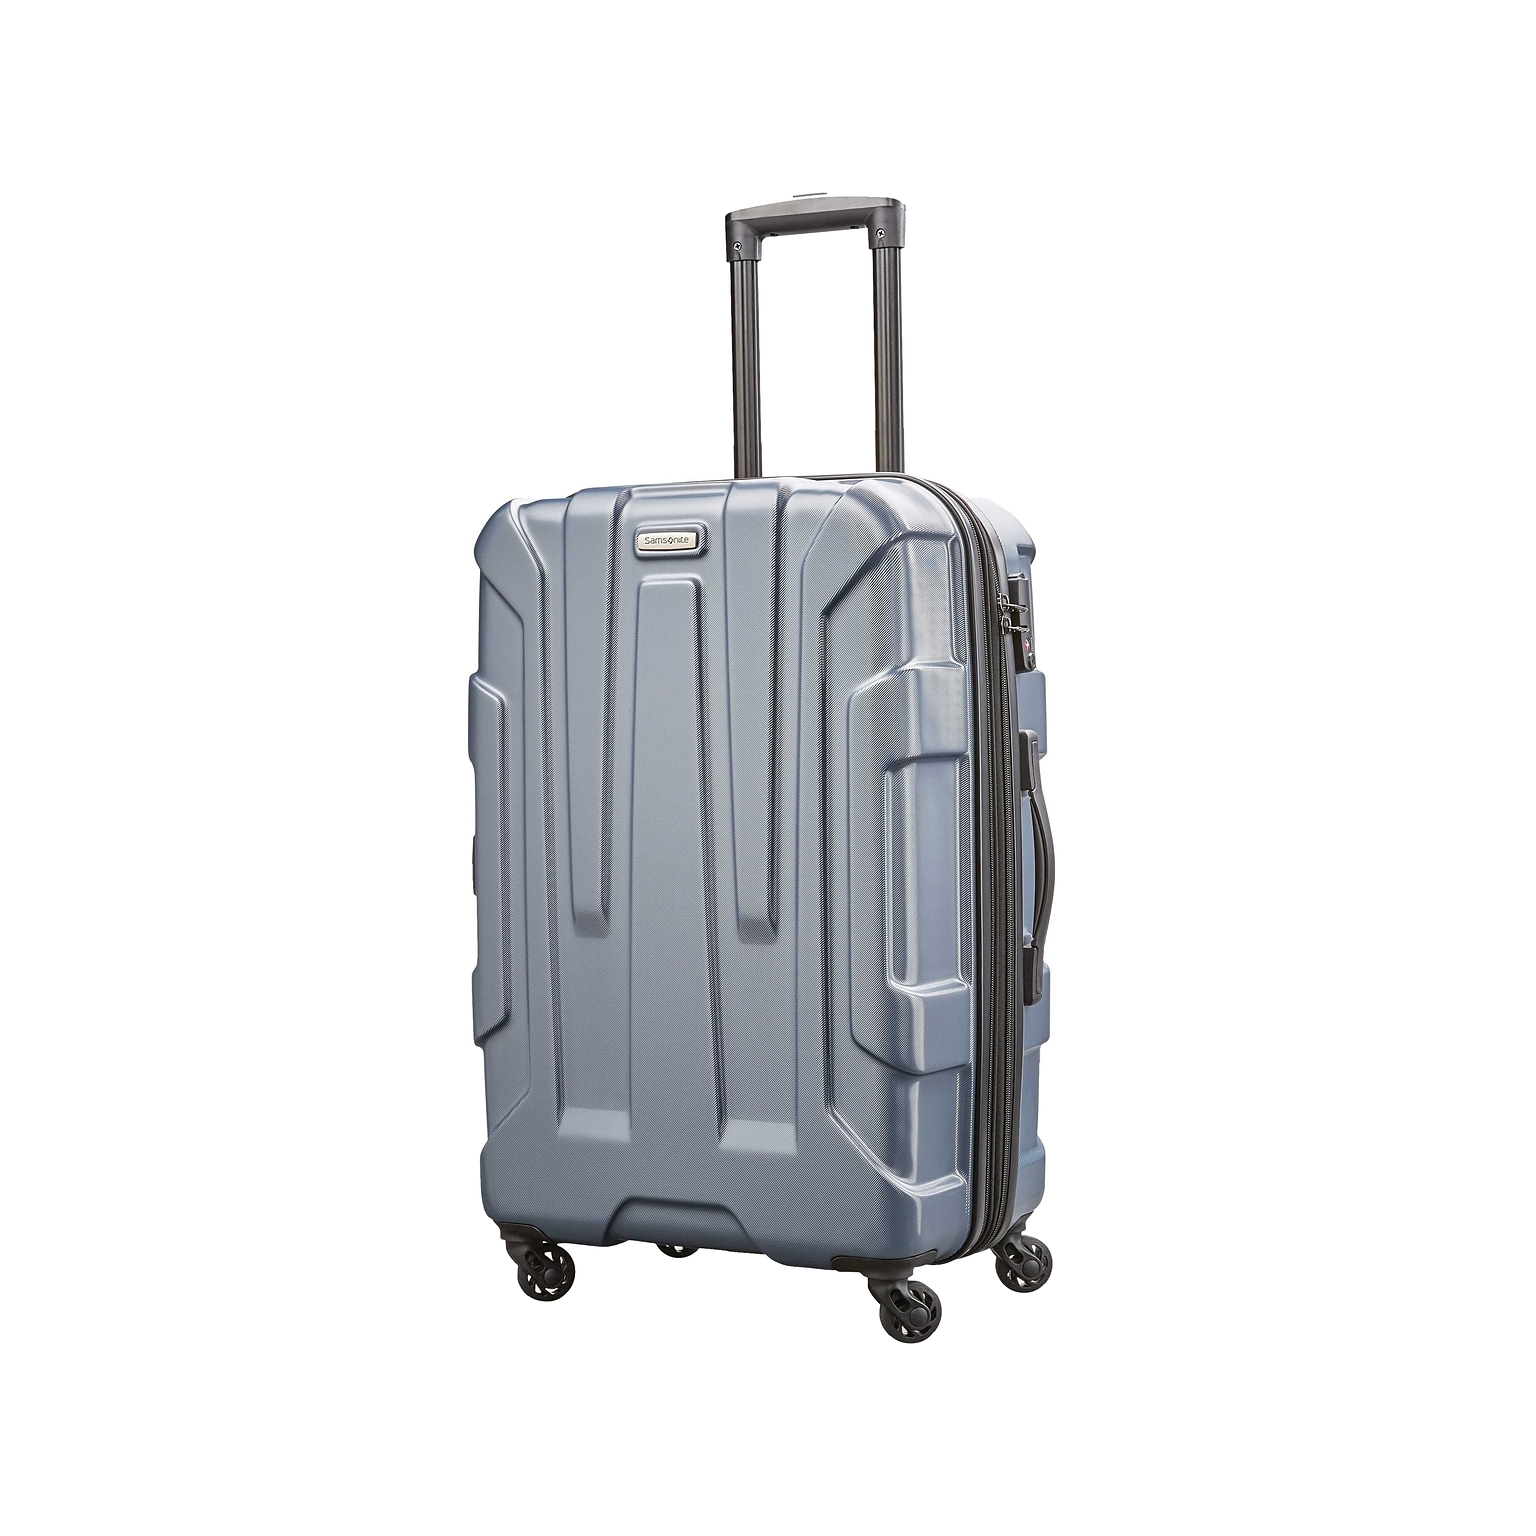 Samsonite Centric Polycarbonate 4-Wheel Spinner Luggage, Blue Slate (102689-1101)